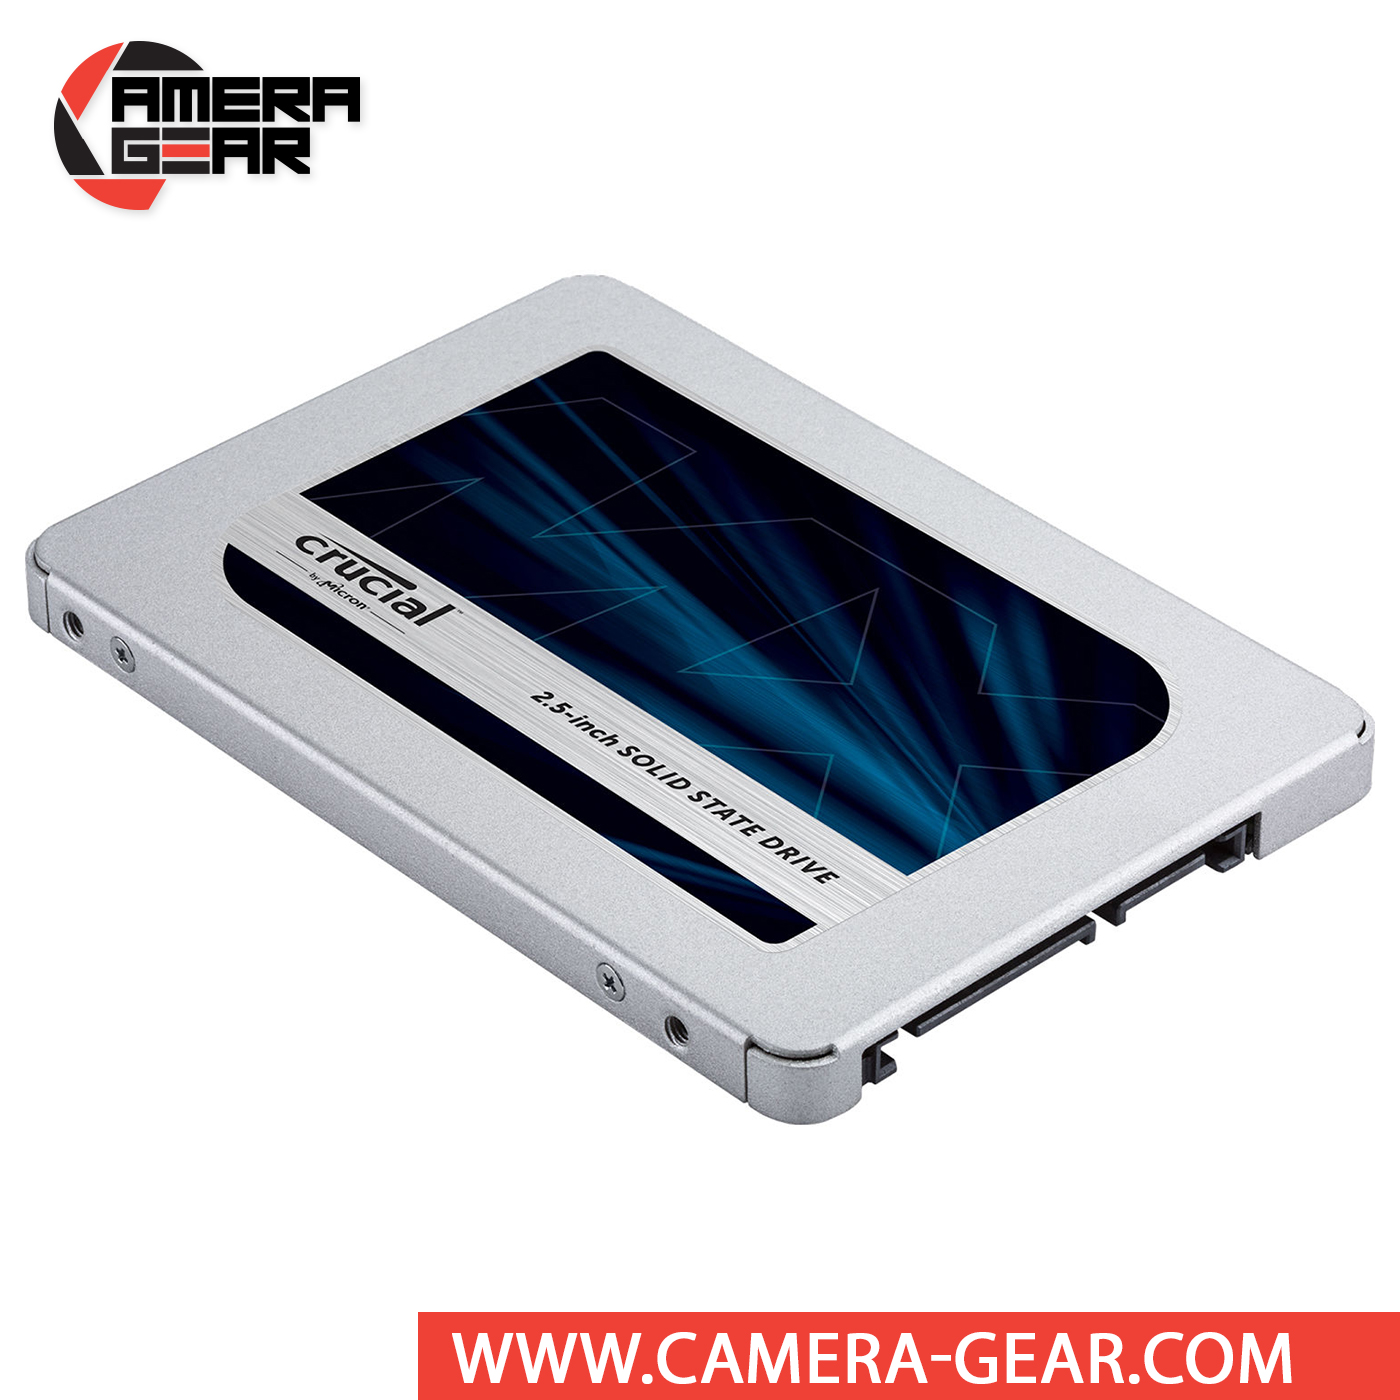 Crucial 500GB MX500 2.5" SATA SSD Camera Gear